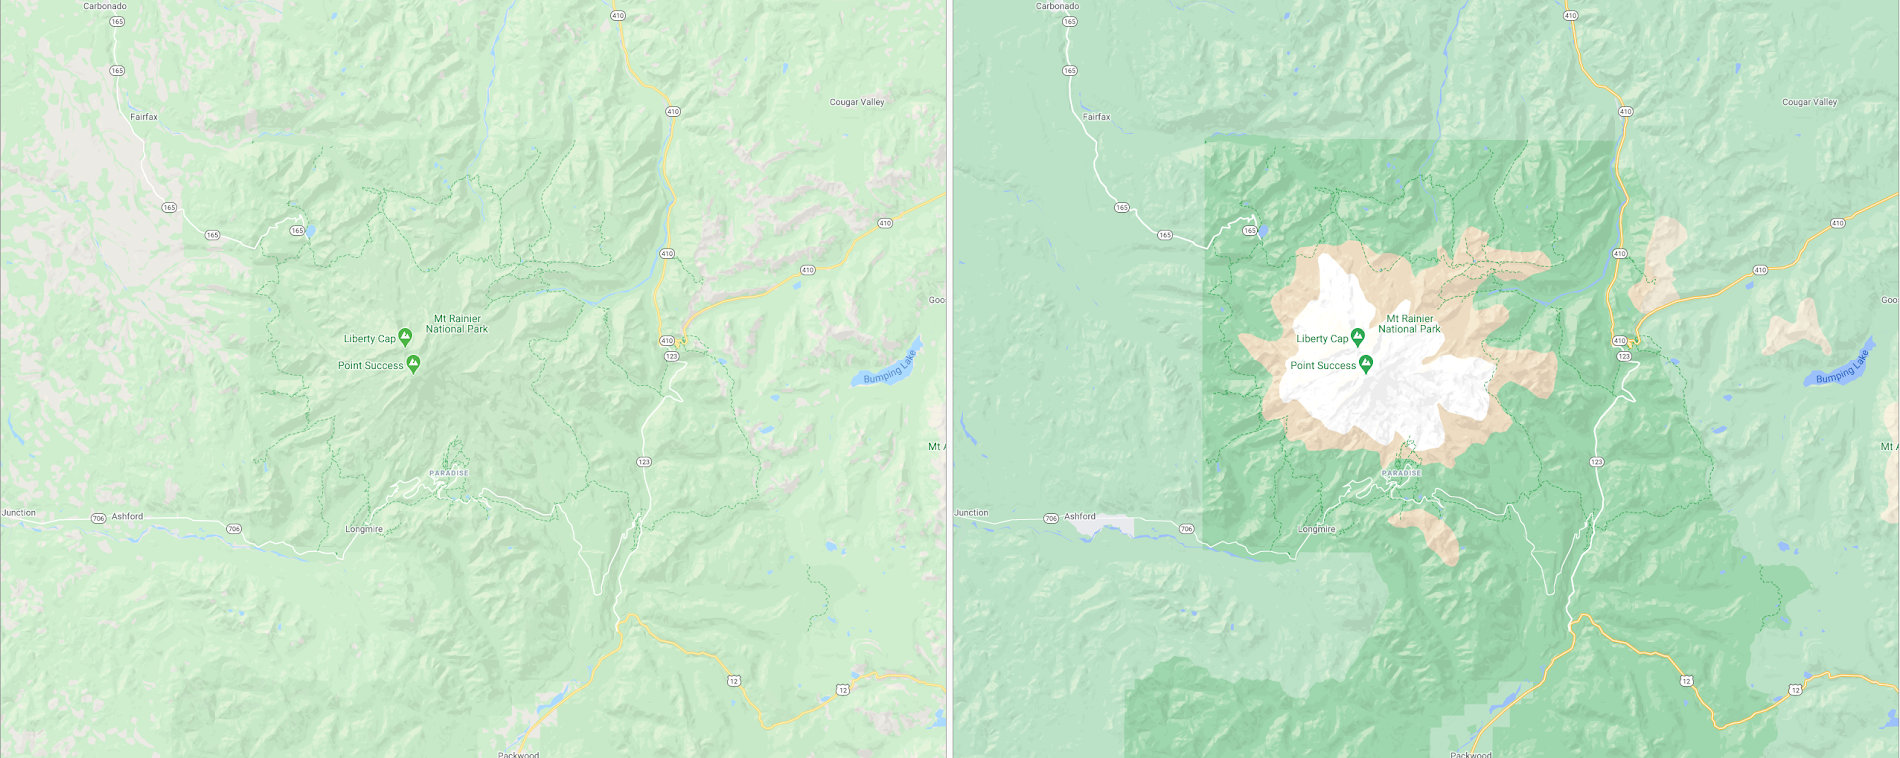 Mt. Rainier National Park New Map Styling